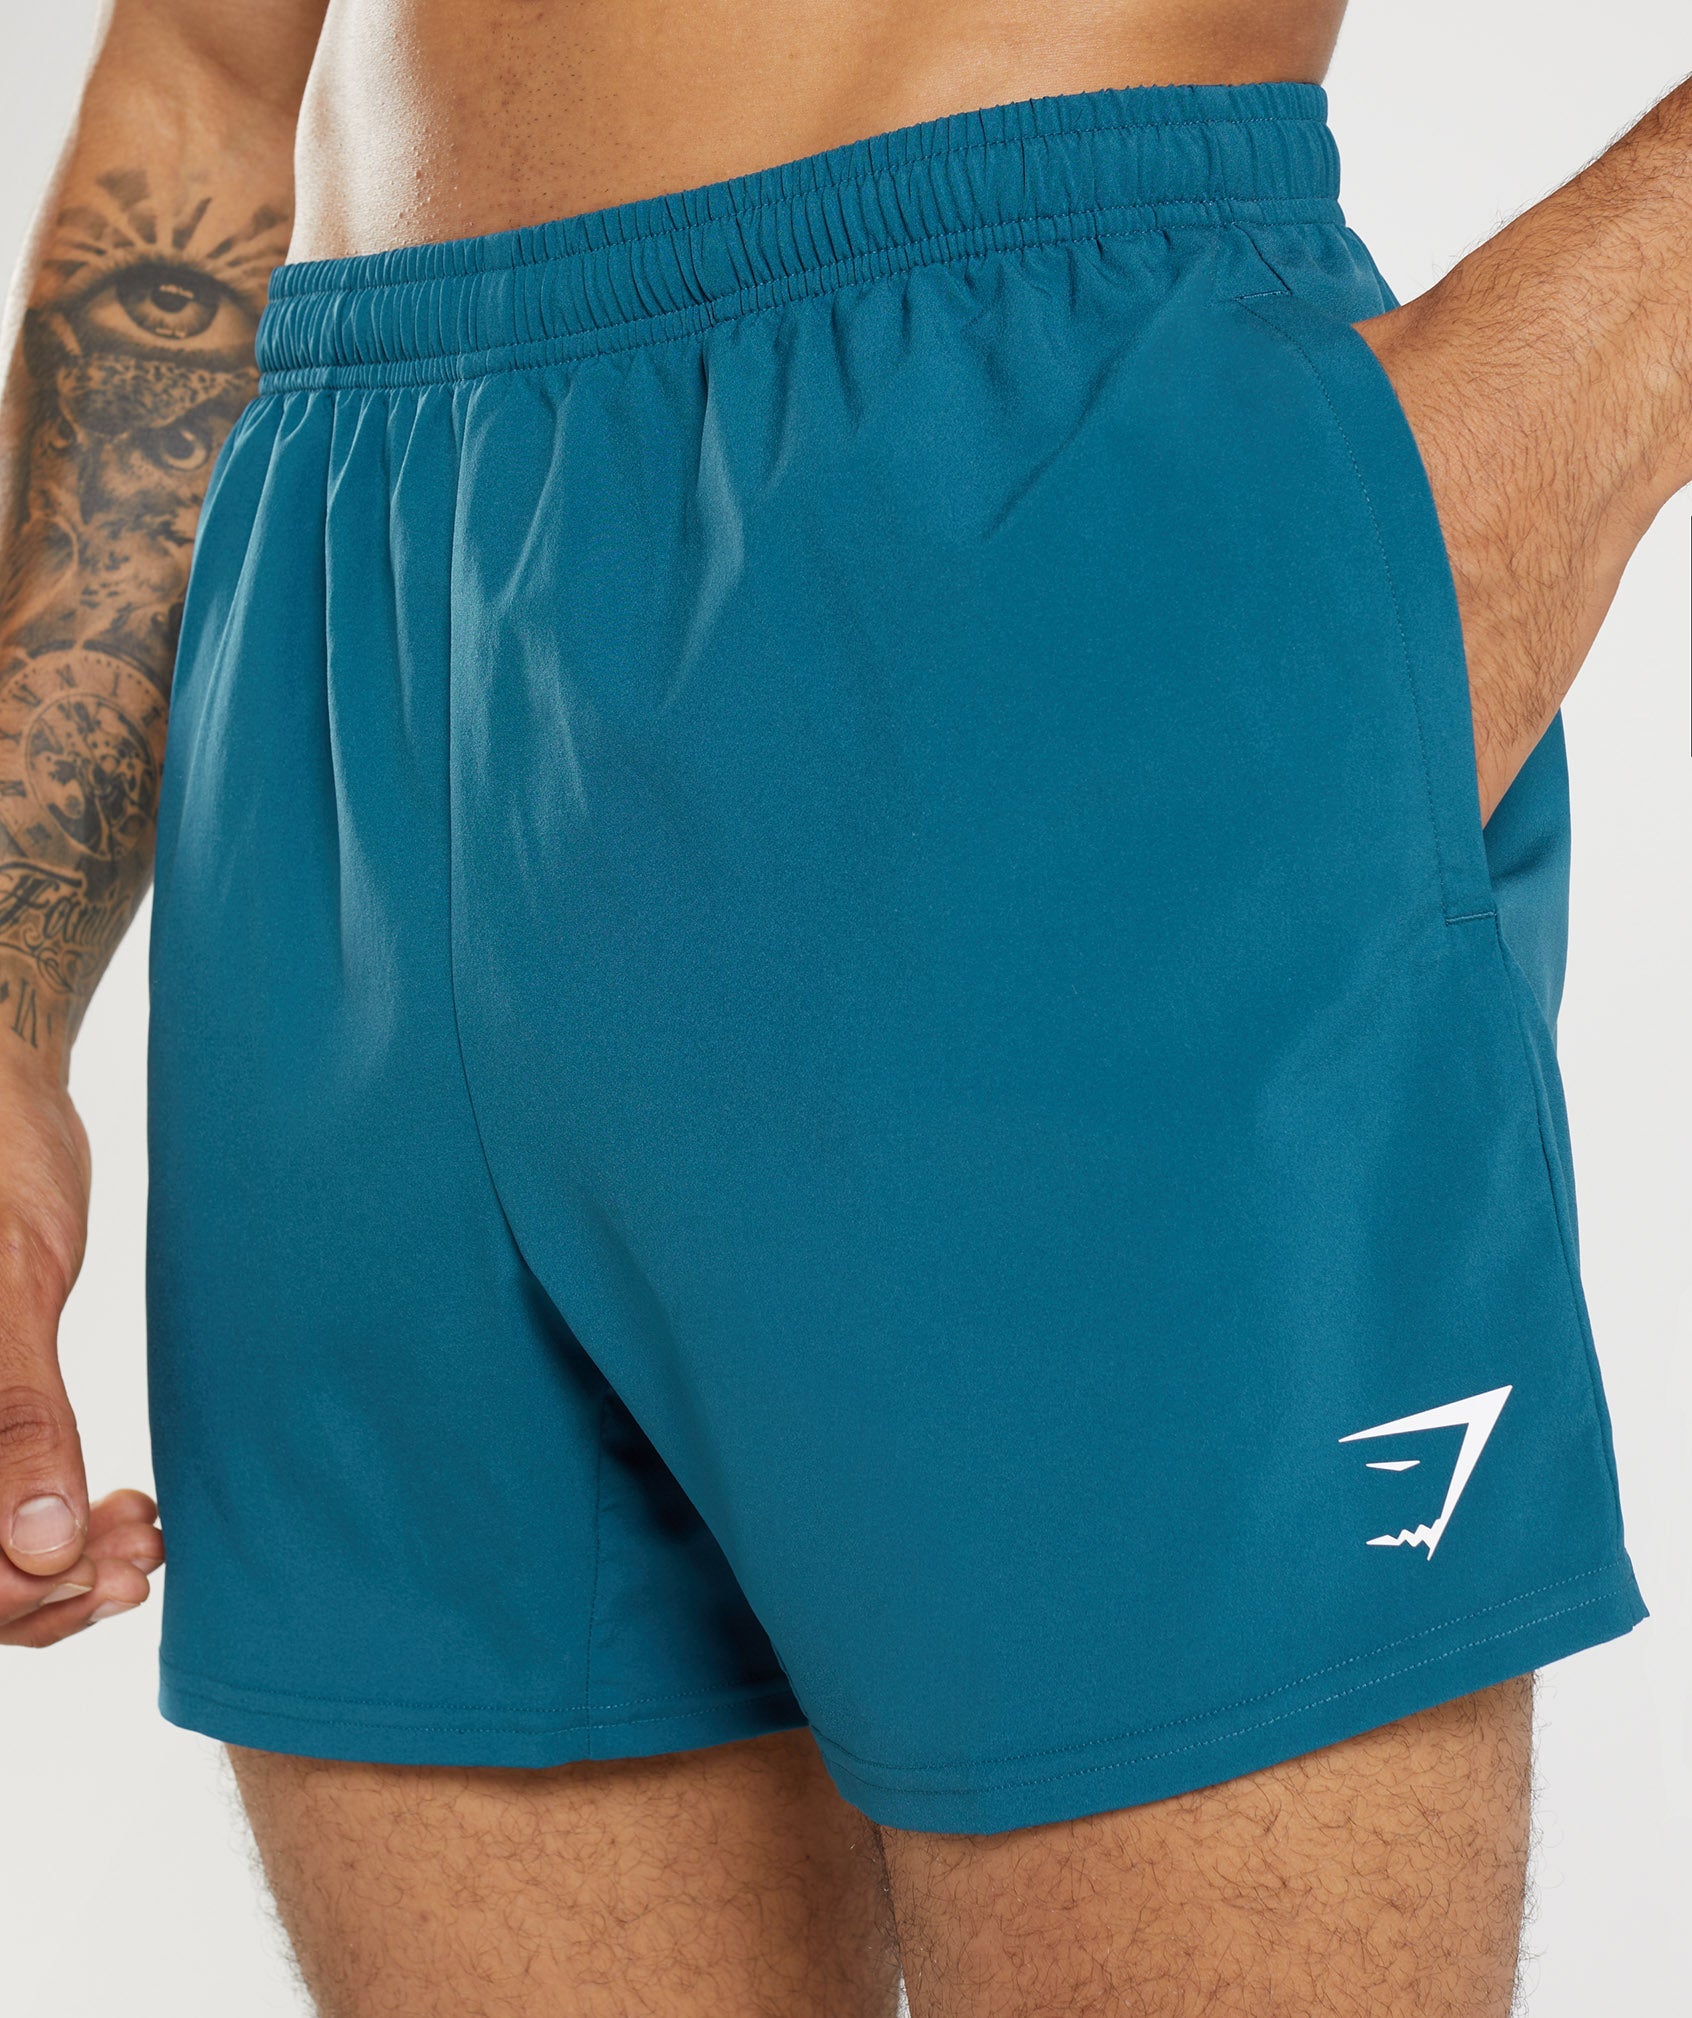 Gymshark Arrival 7 Shorts - Atlantic Blue